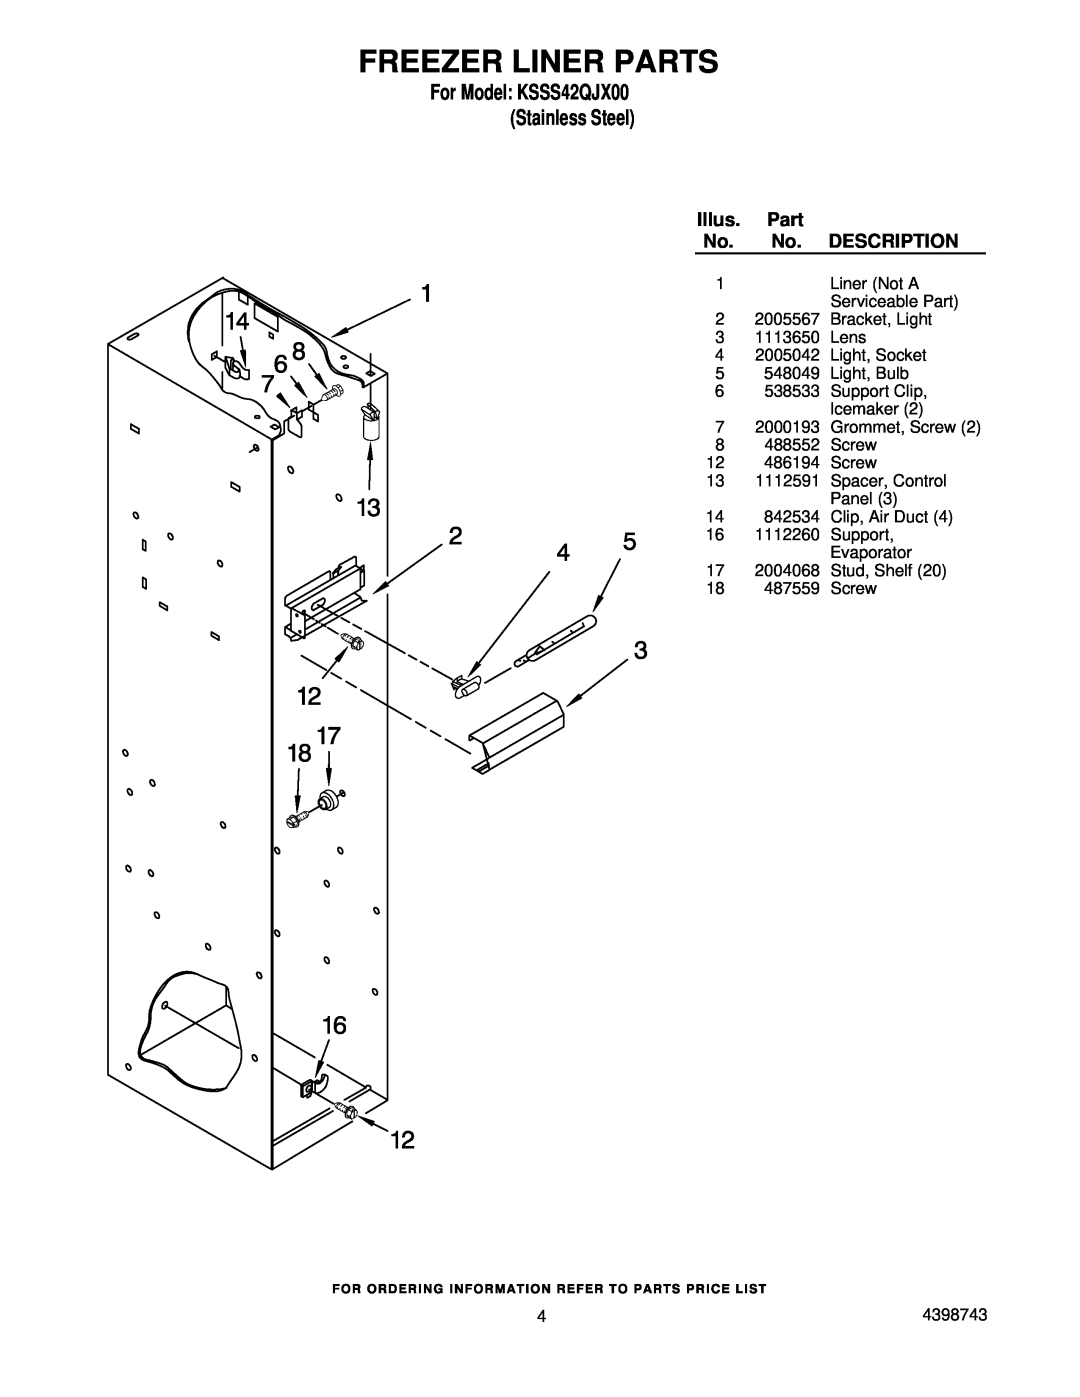 KitchenAid manual Freezer Liner Parts, For Model KSSS42QJX00 Stainless Steel, Illus, Description 